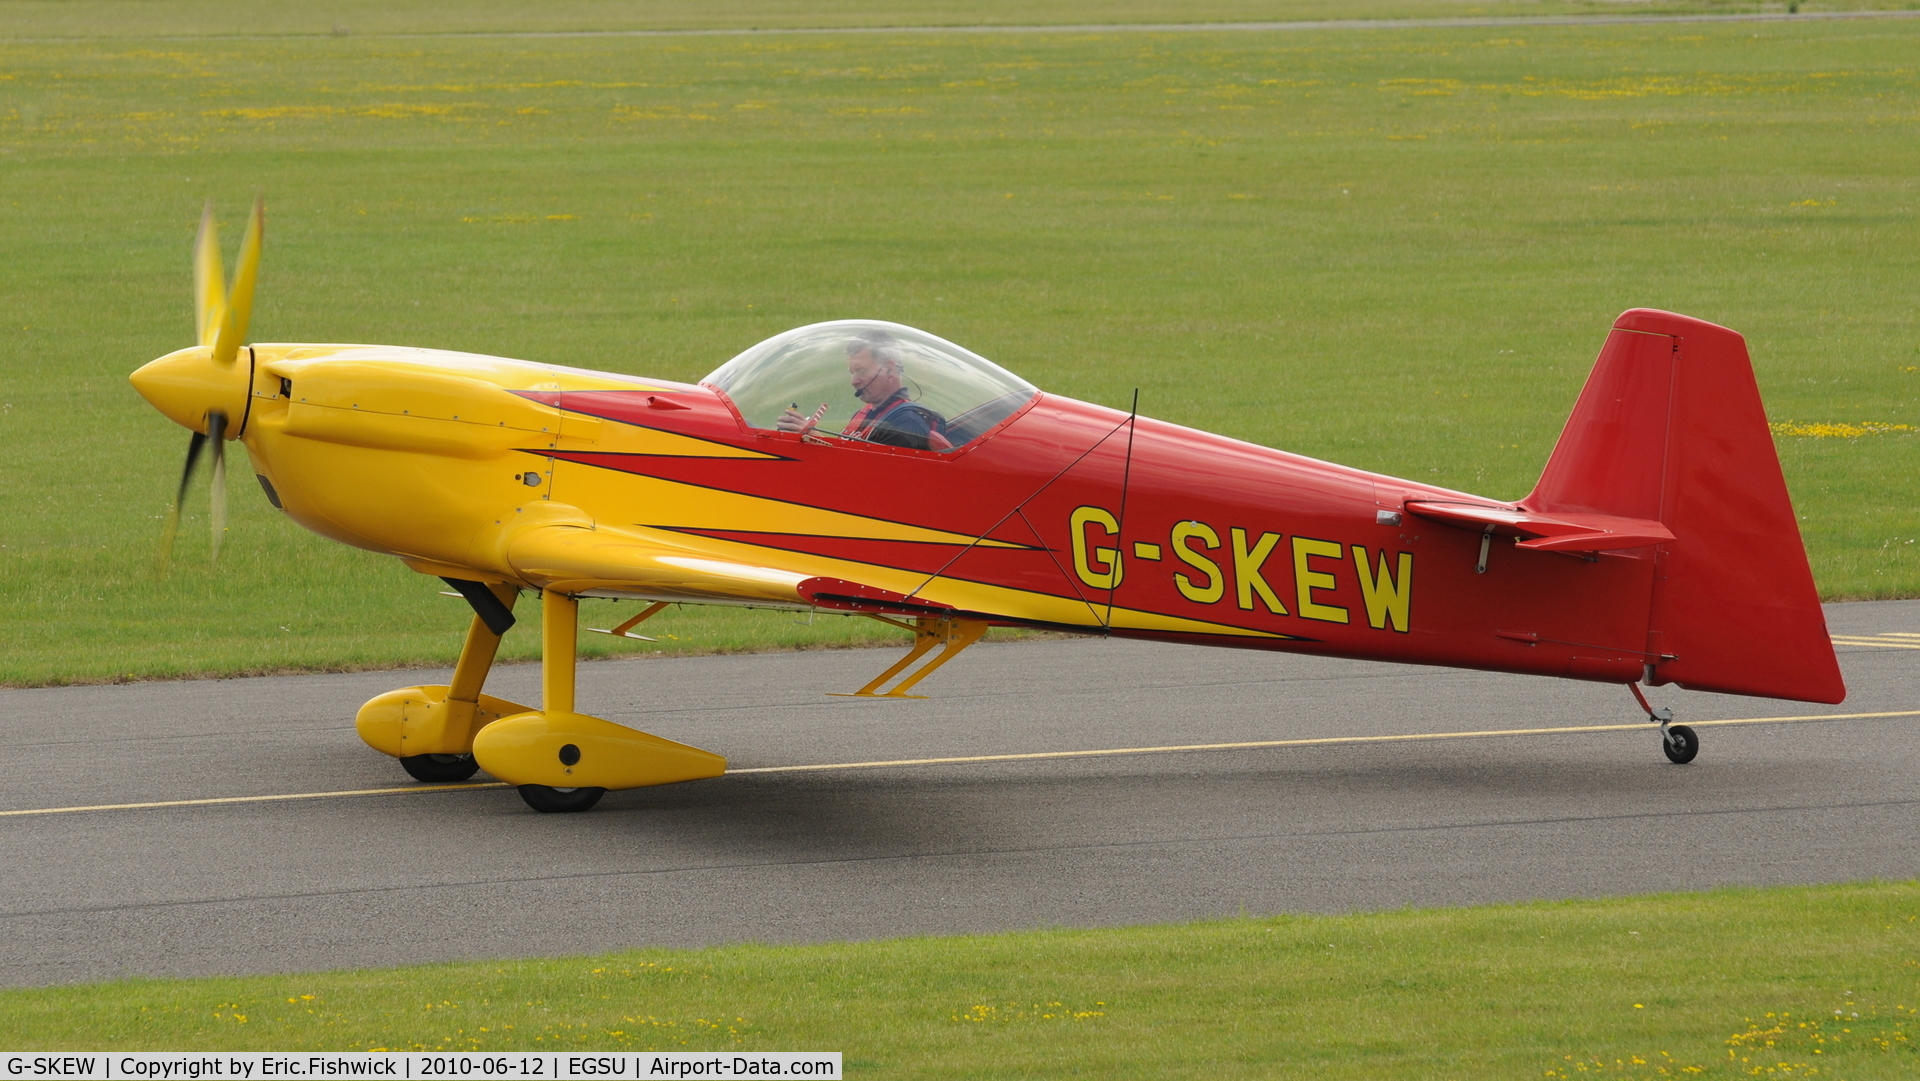 G-SKEW, 1997 Mudry CAP-232 C/N 11, 1. G-SKEW at The Duxford Trophy Aerobatic Contest, June 2010